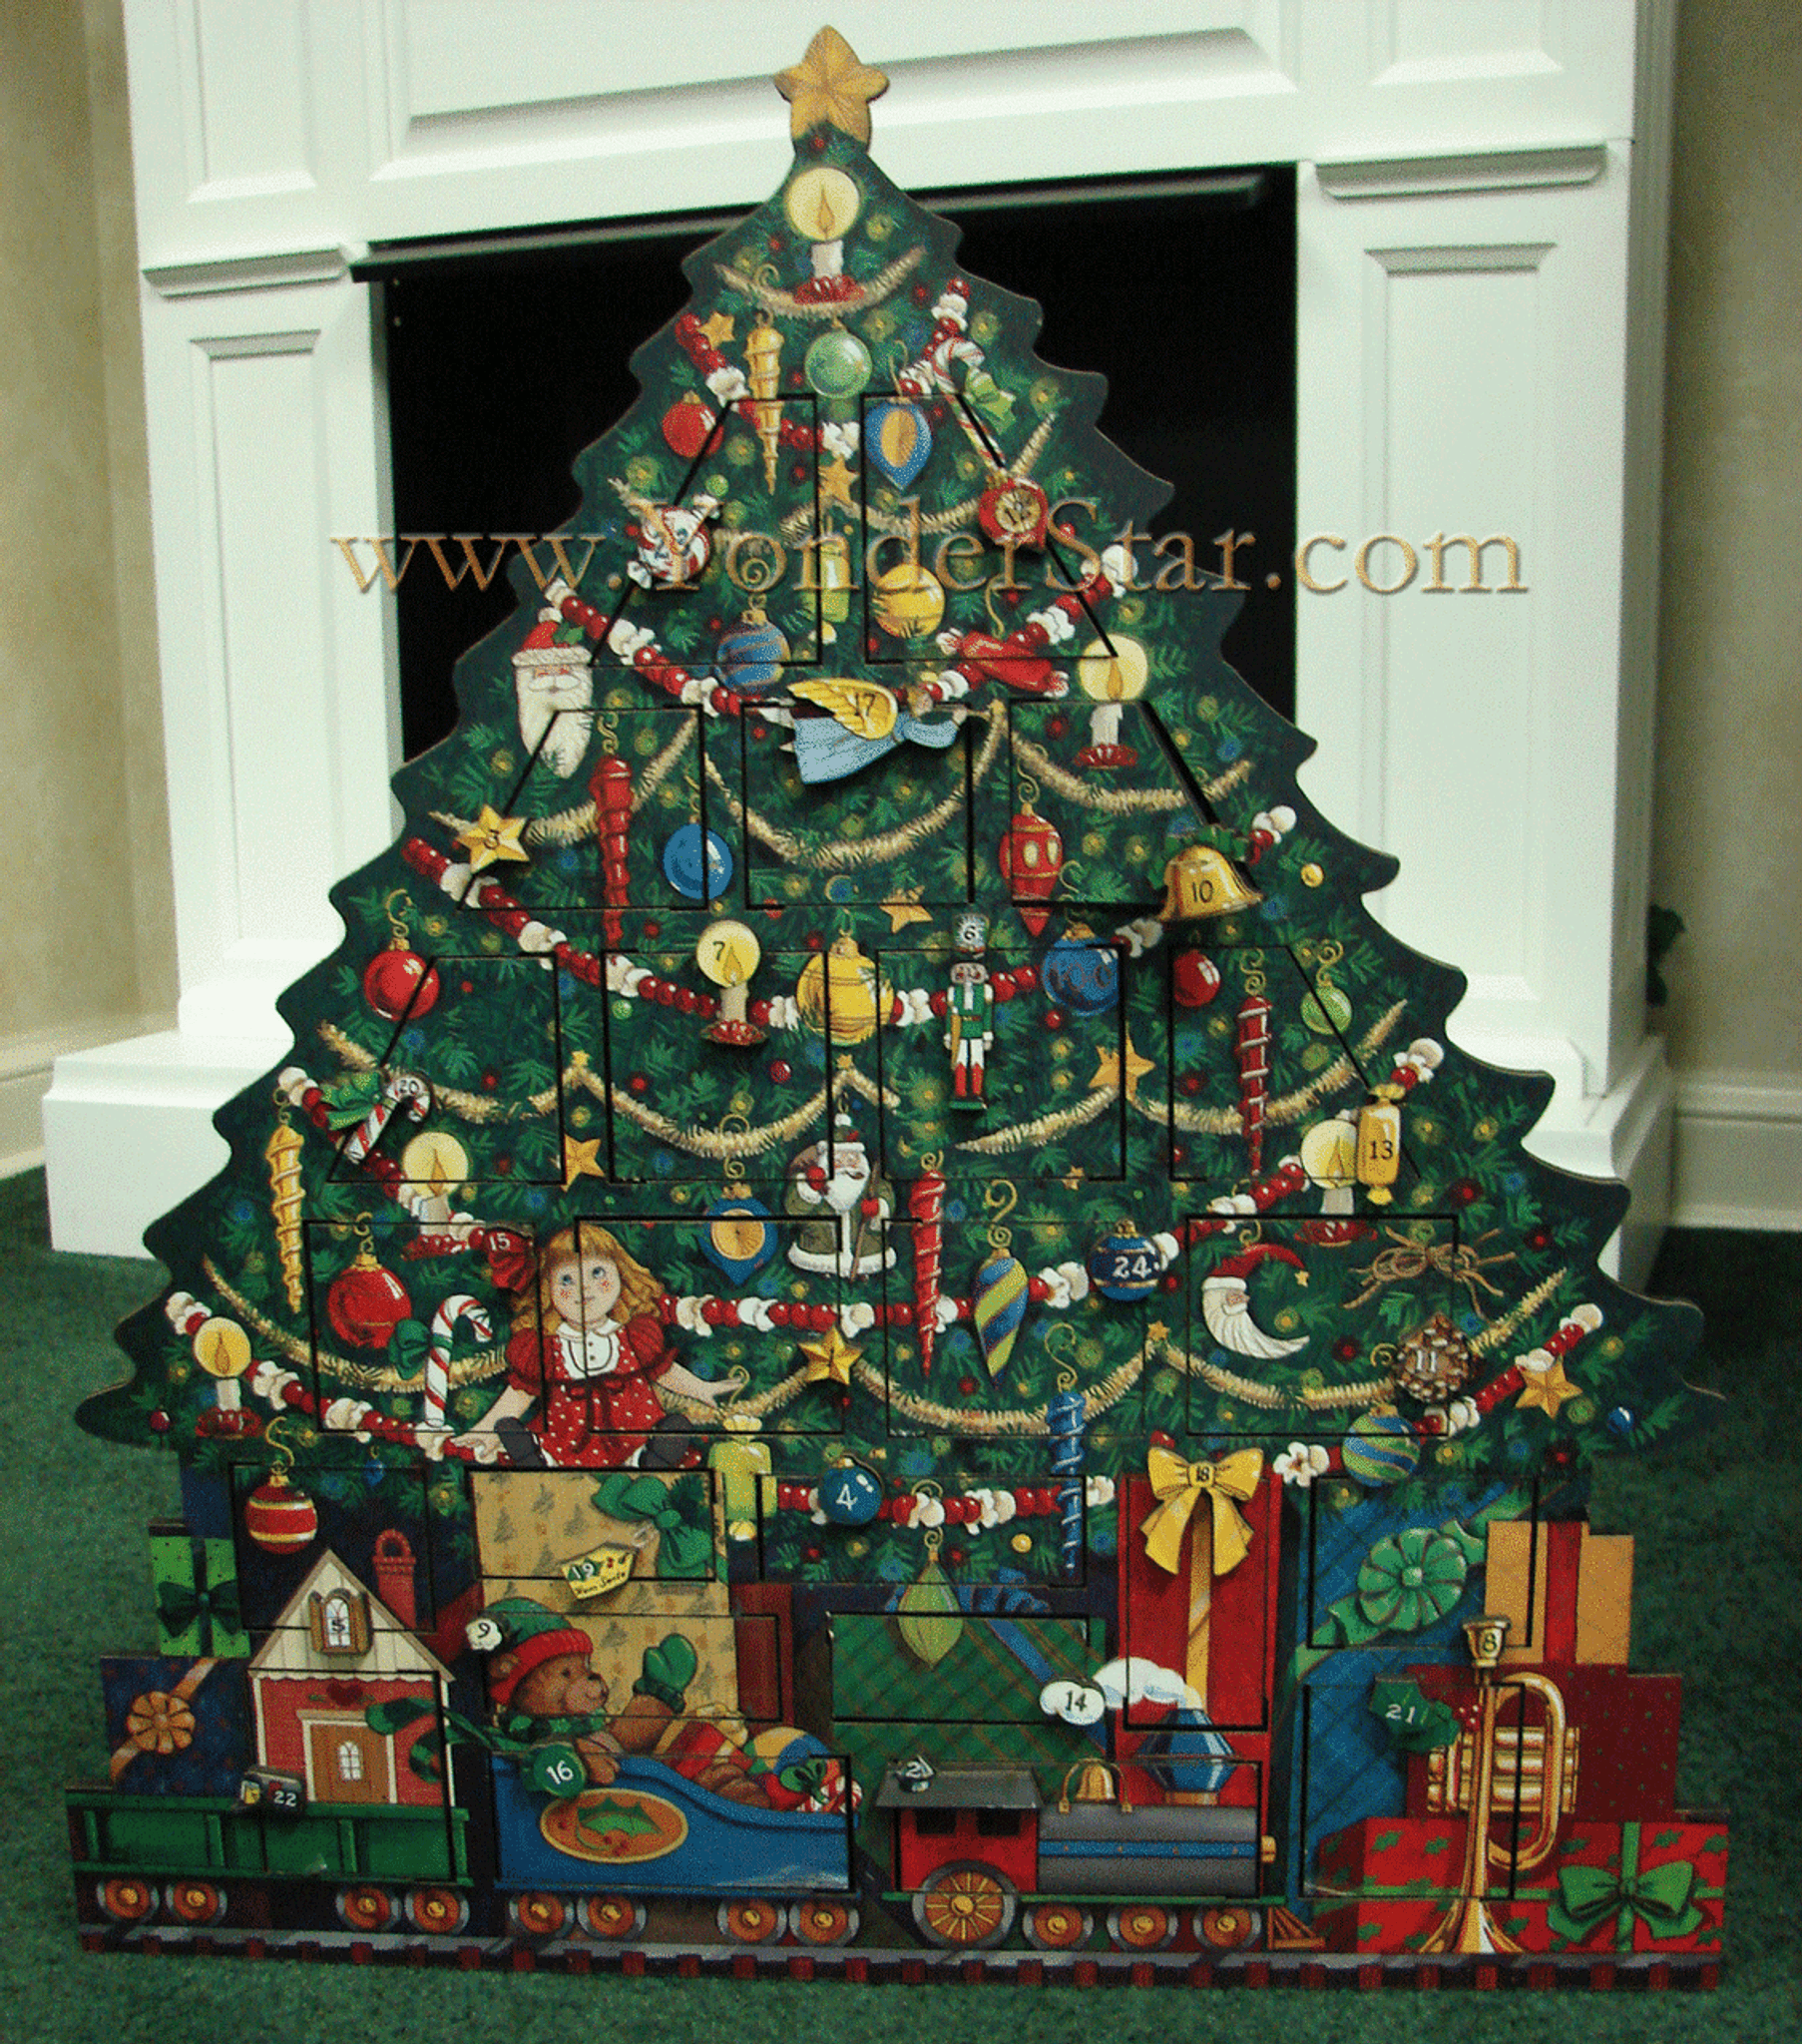 Christmas Tree Advent Calendar Yonder Star Christmas Shop, LLC